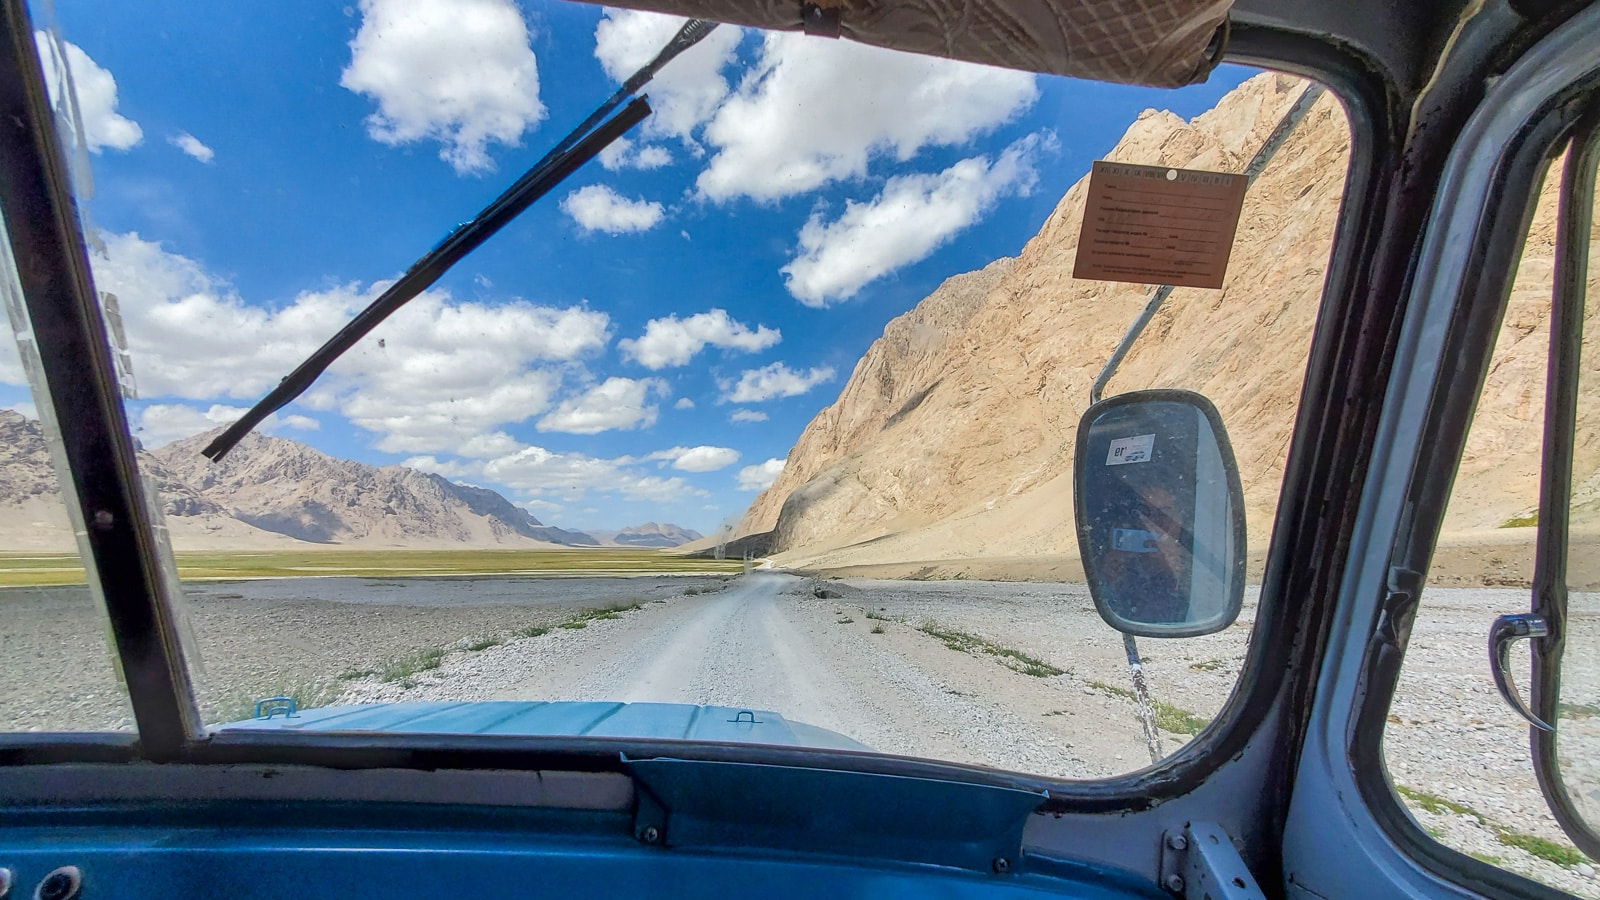 Jeep ride from Shaimak village to Murghab, Tajikistan